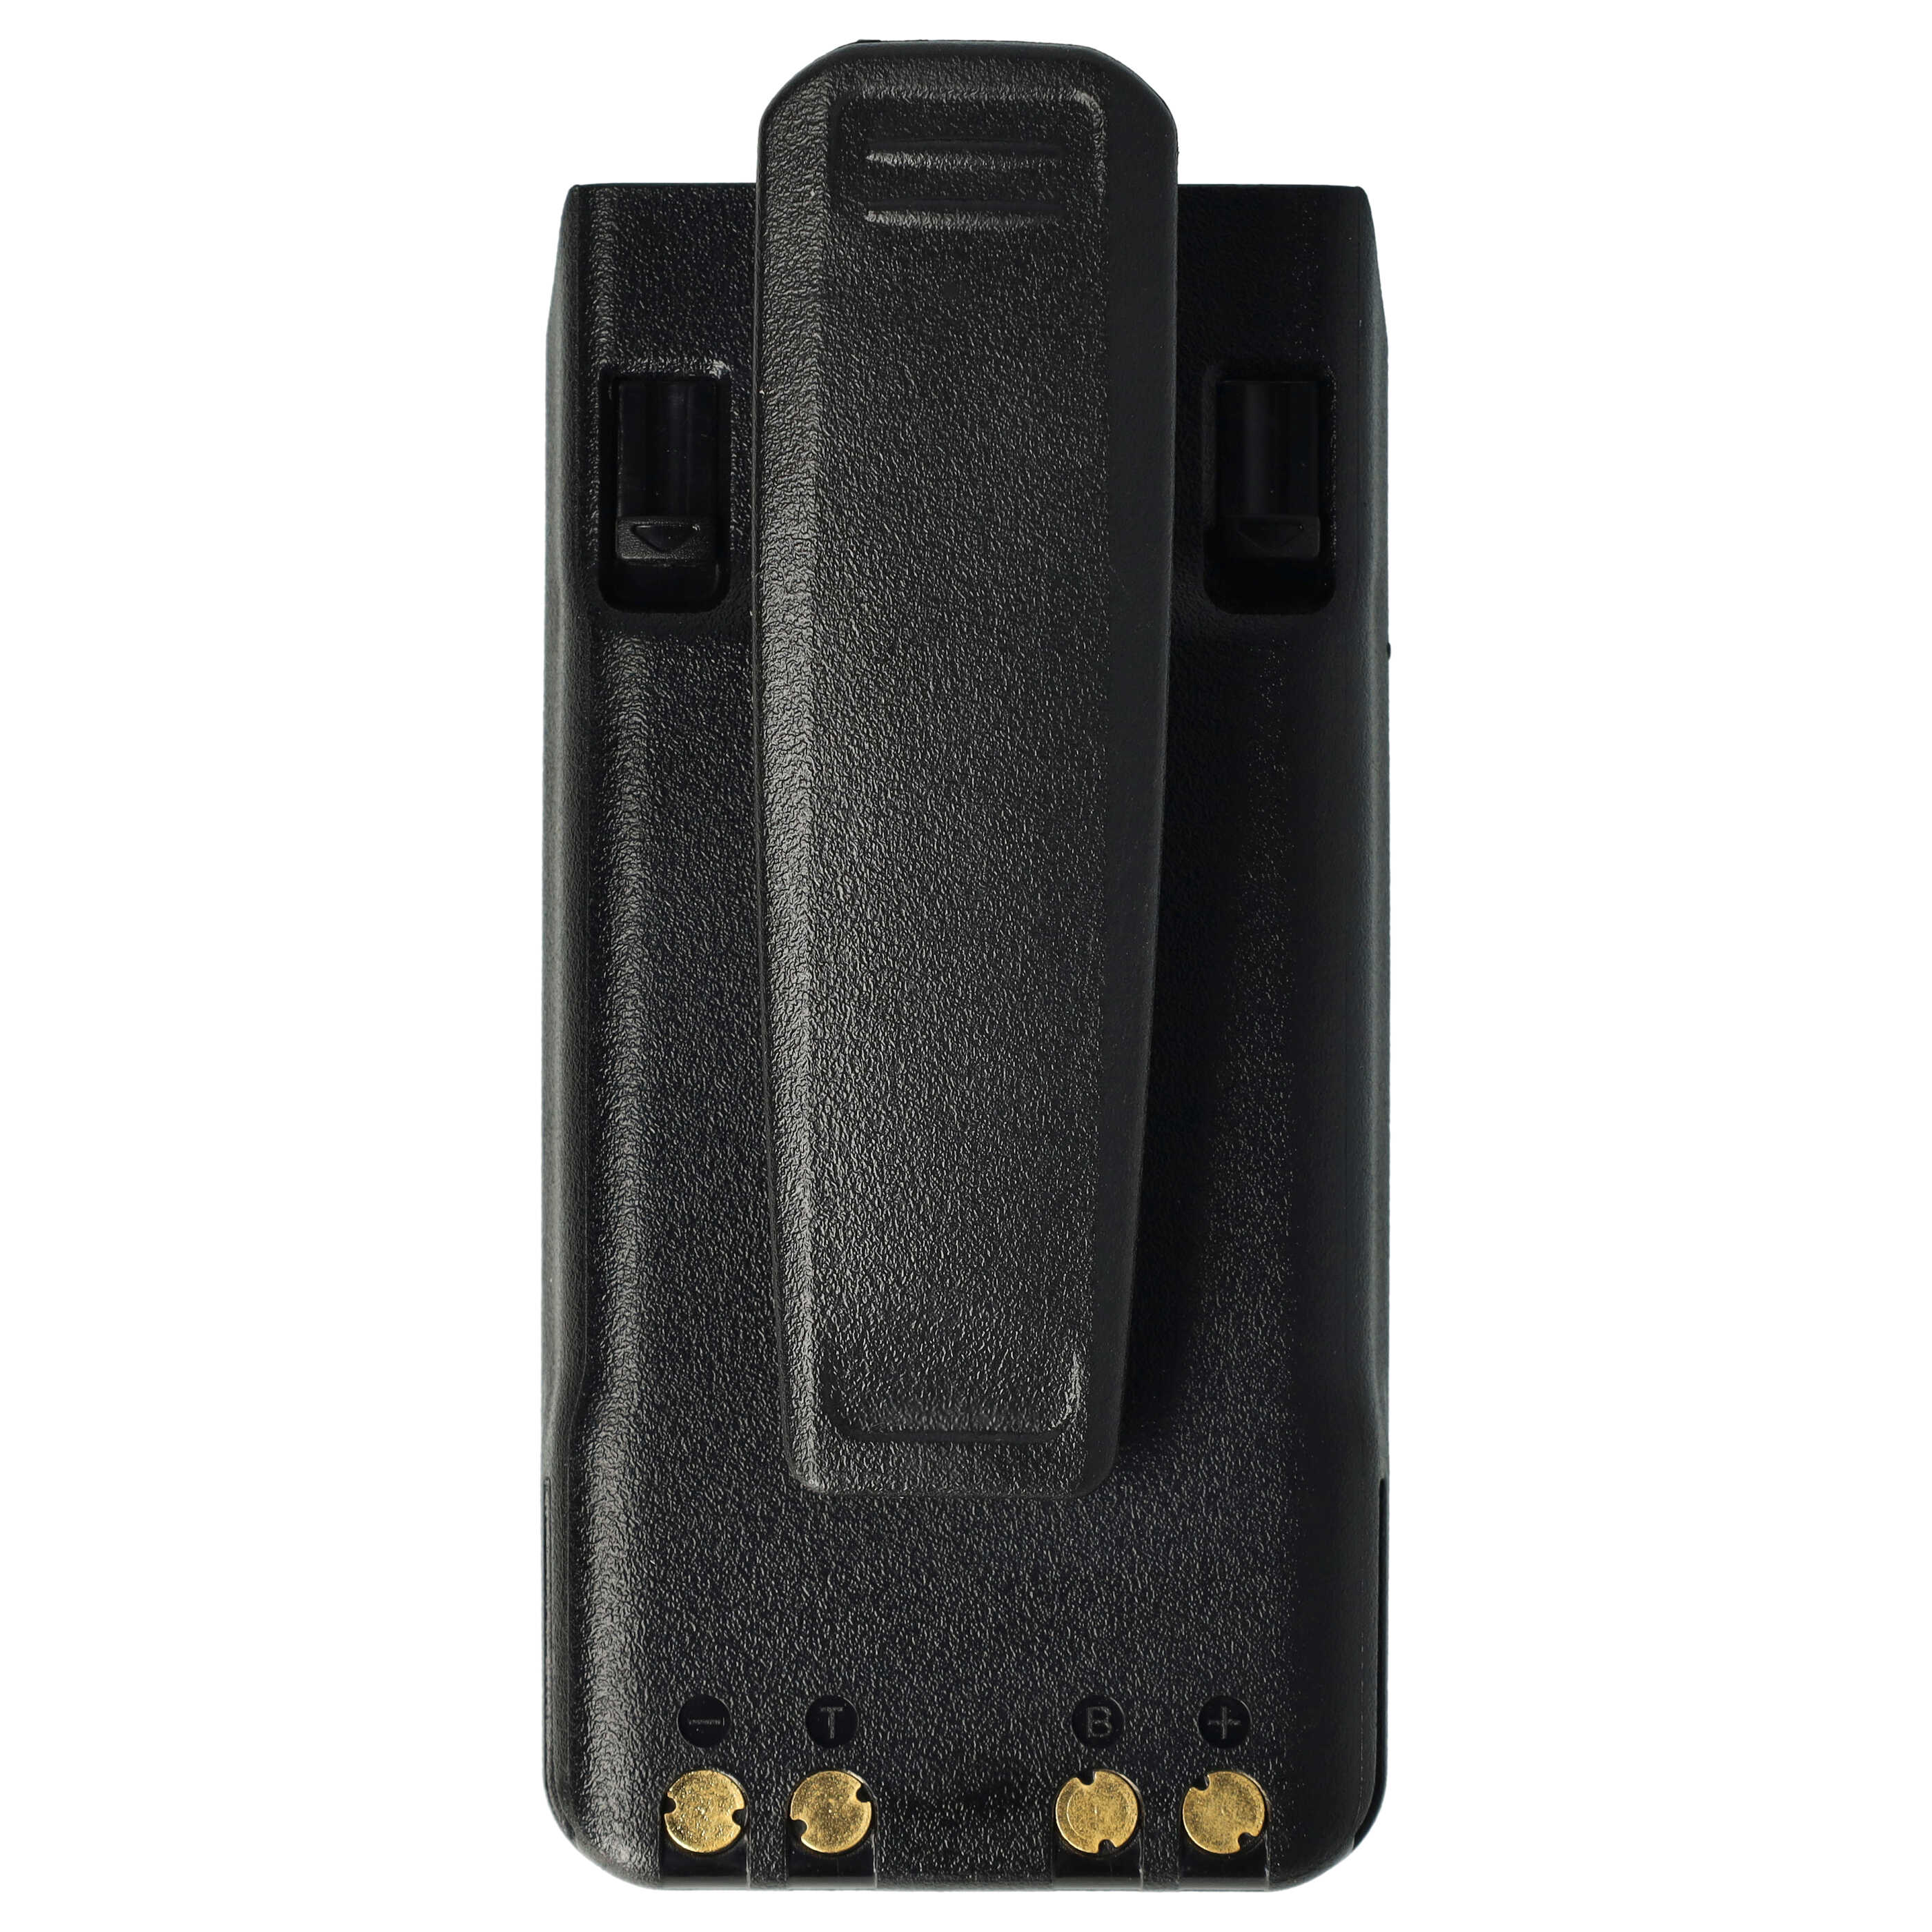 Batería reemplaza Icom BP-279, BP-280 para radio, walkie-talkie Icom - 1500 mAh 7,4 V Li-Ion con clip